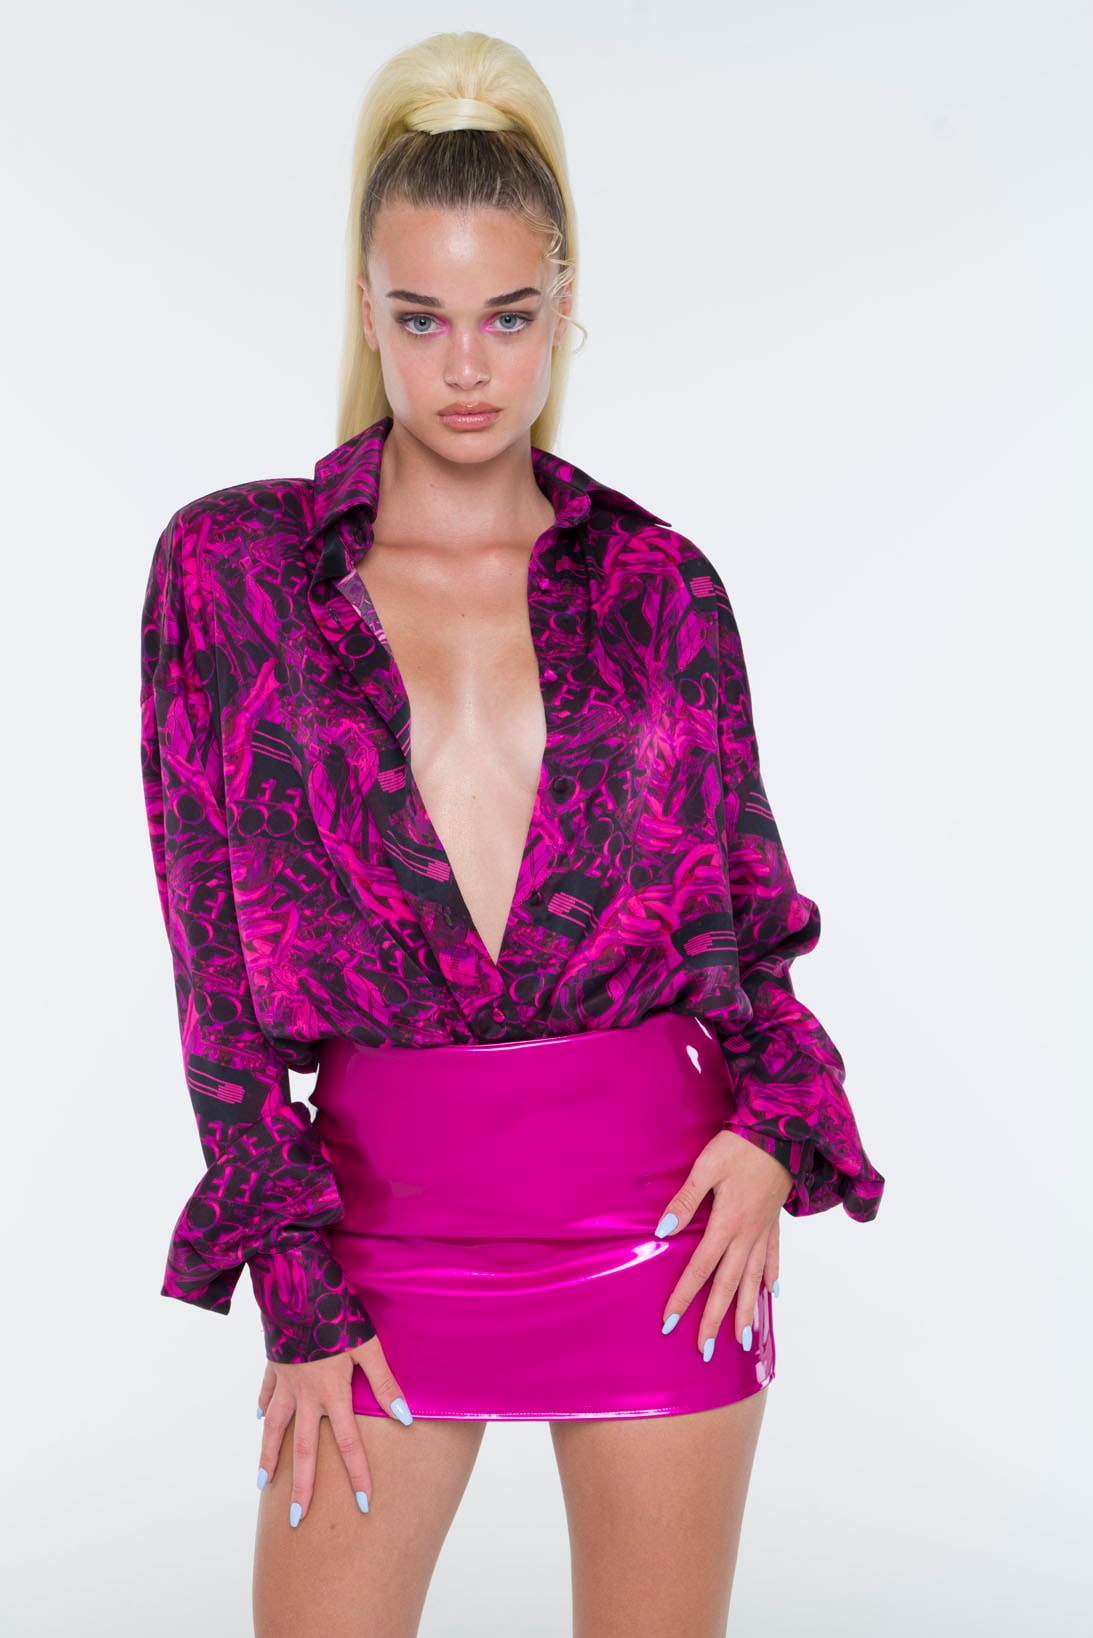 laquan smith spring summer 2021 lookbook 70s fashion dresses blouses bodysuits new york fashion week nyfw